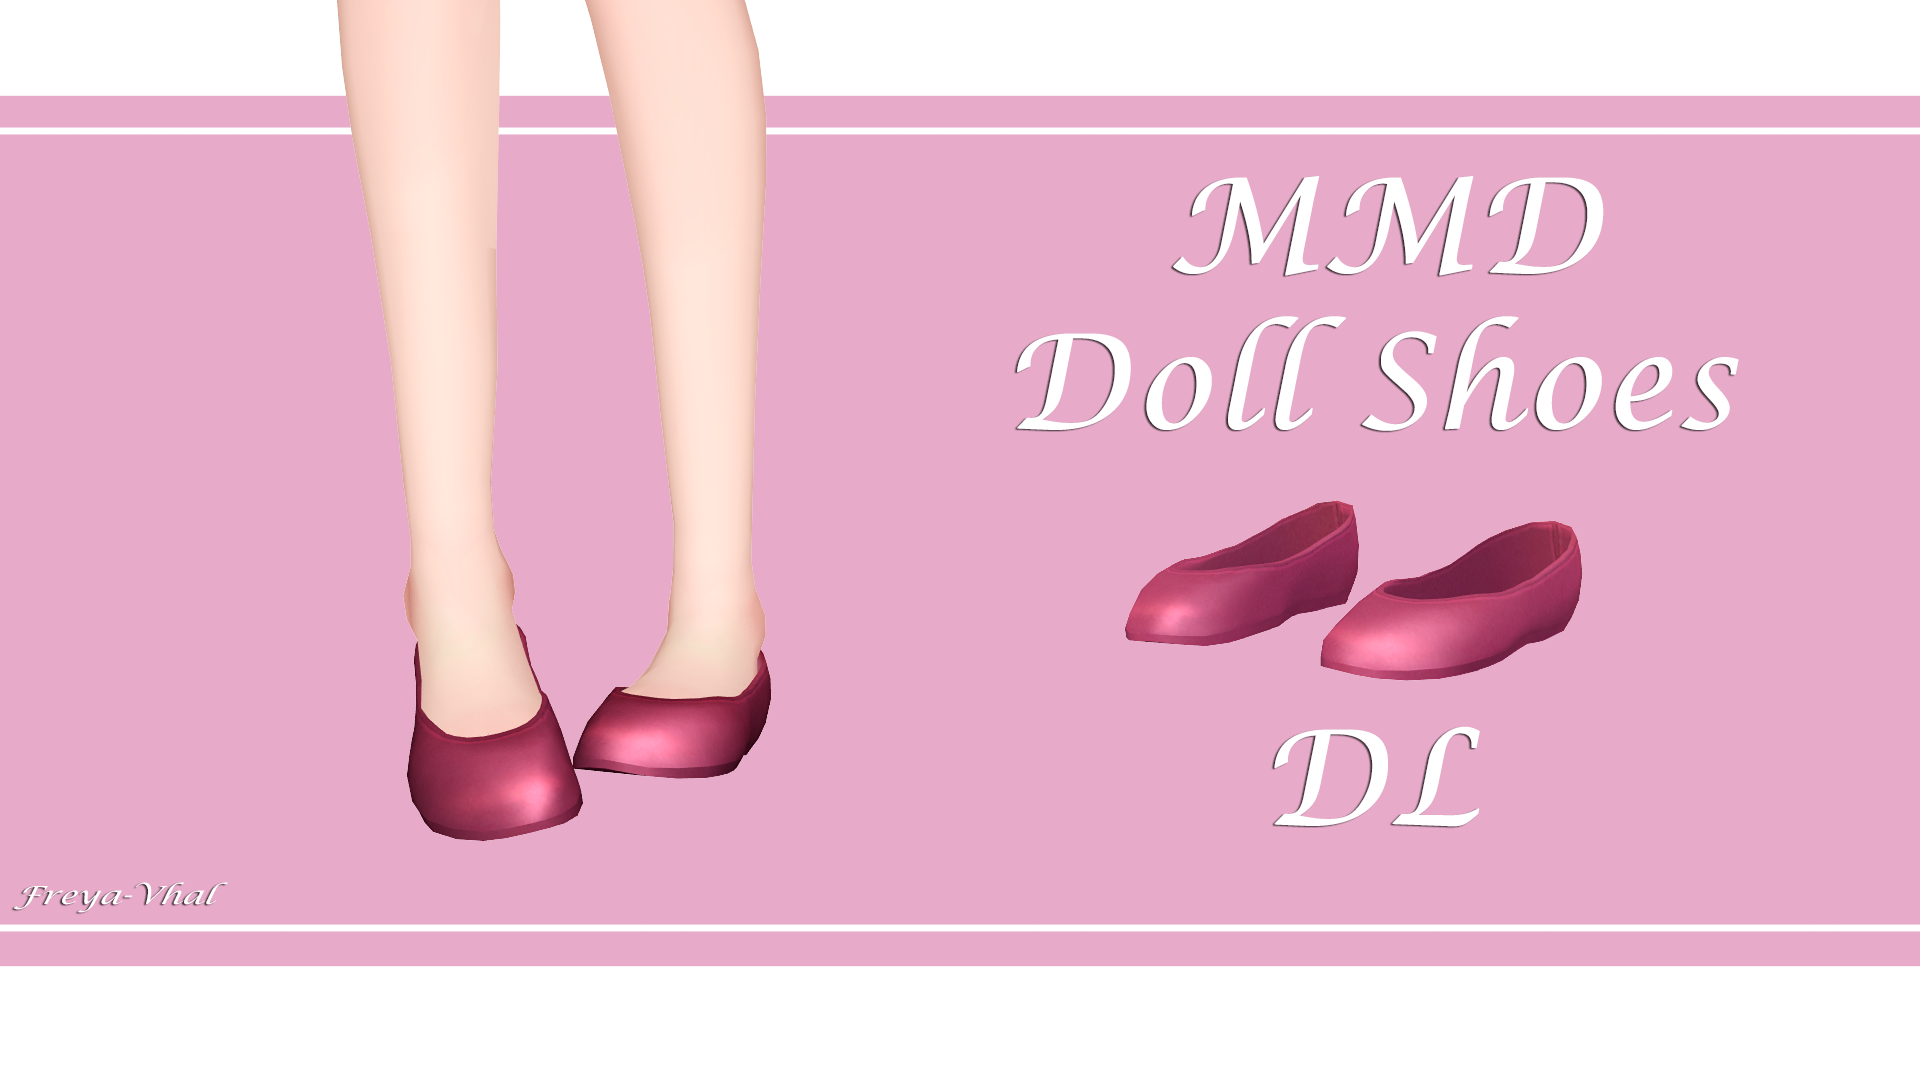 DL] Doll Shoes by Freya-Vhal on DeviantArt